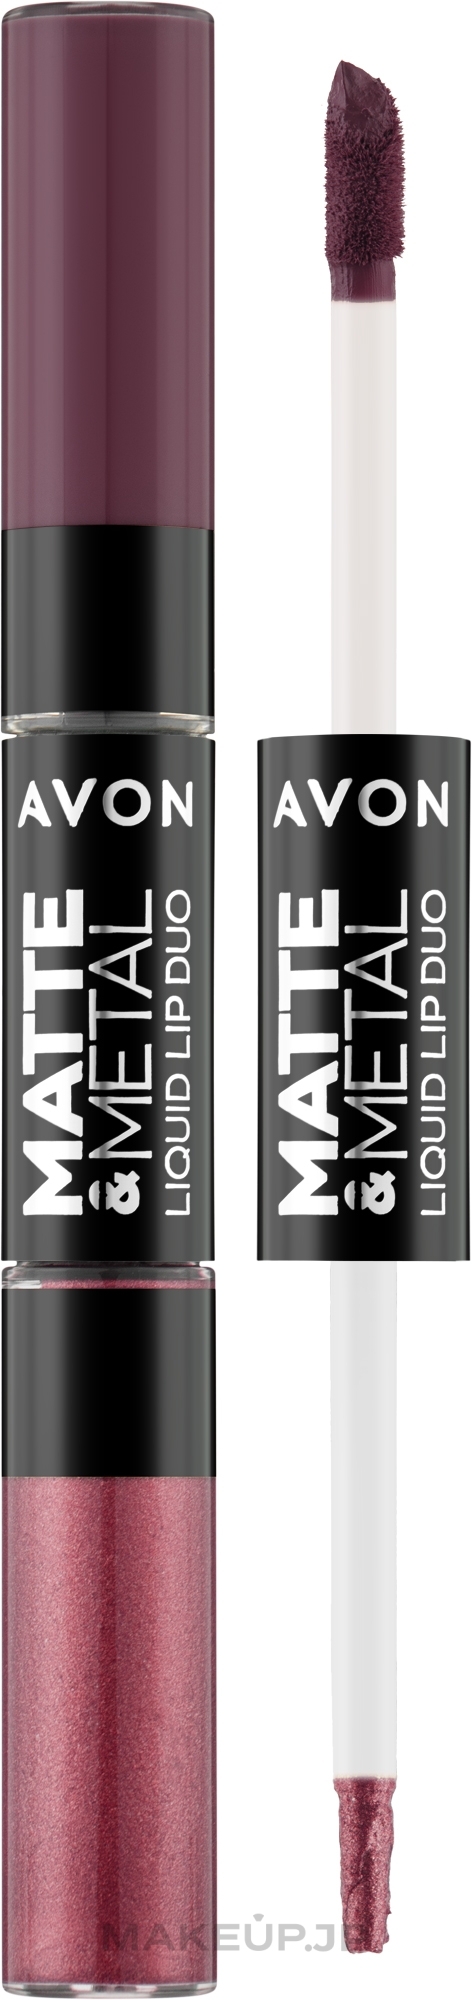 Liquid Lipstick 2in1 - Avon Matte & Metal Liquid Lip Duo — photo Berry Glaze